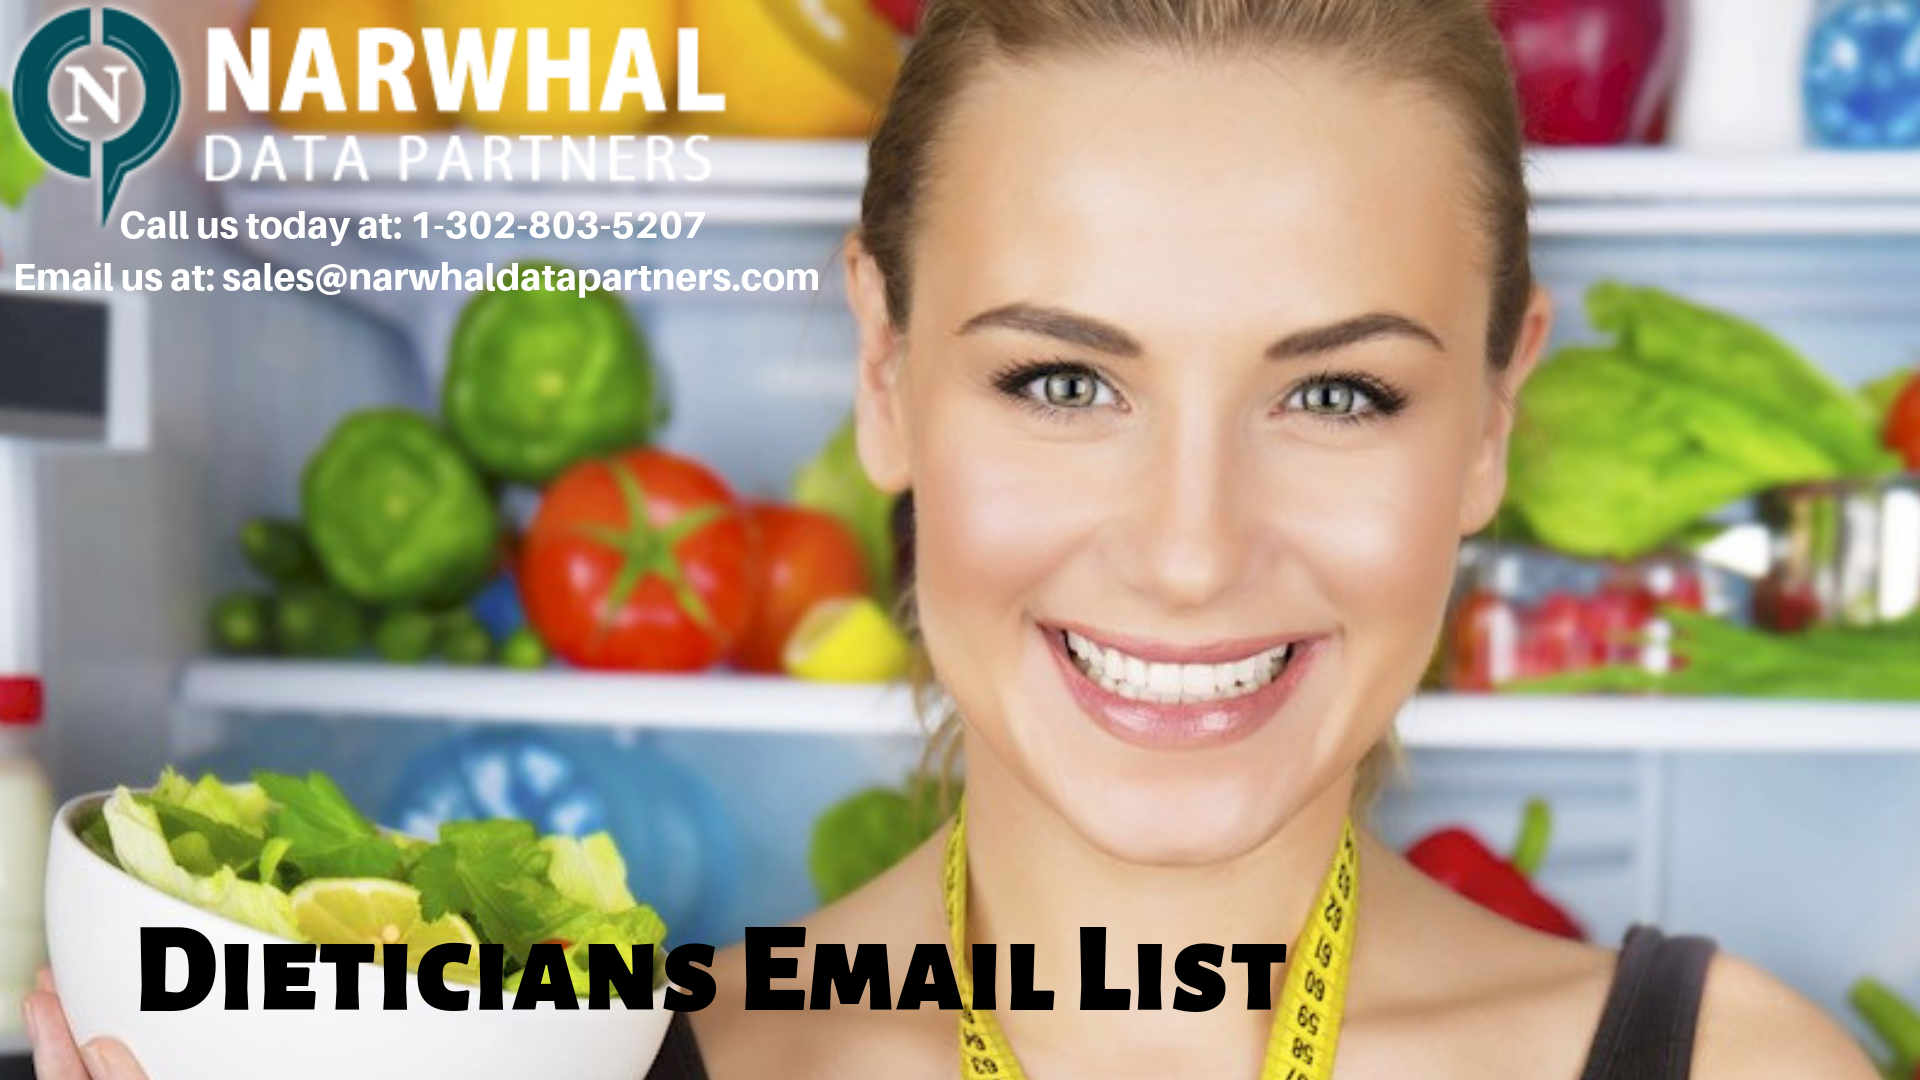 http://narwhaldatapartners.com/dieticians-email-list.html